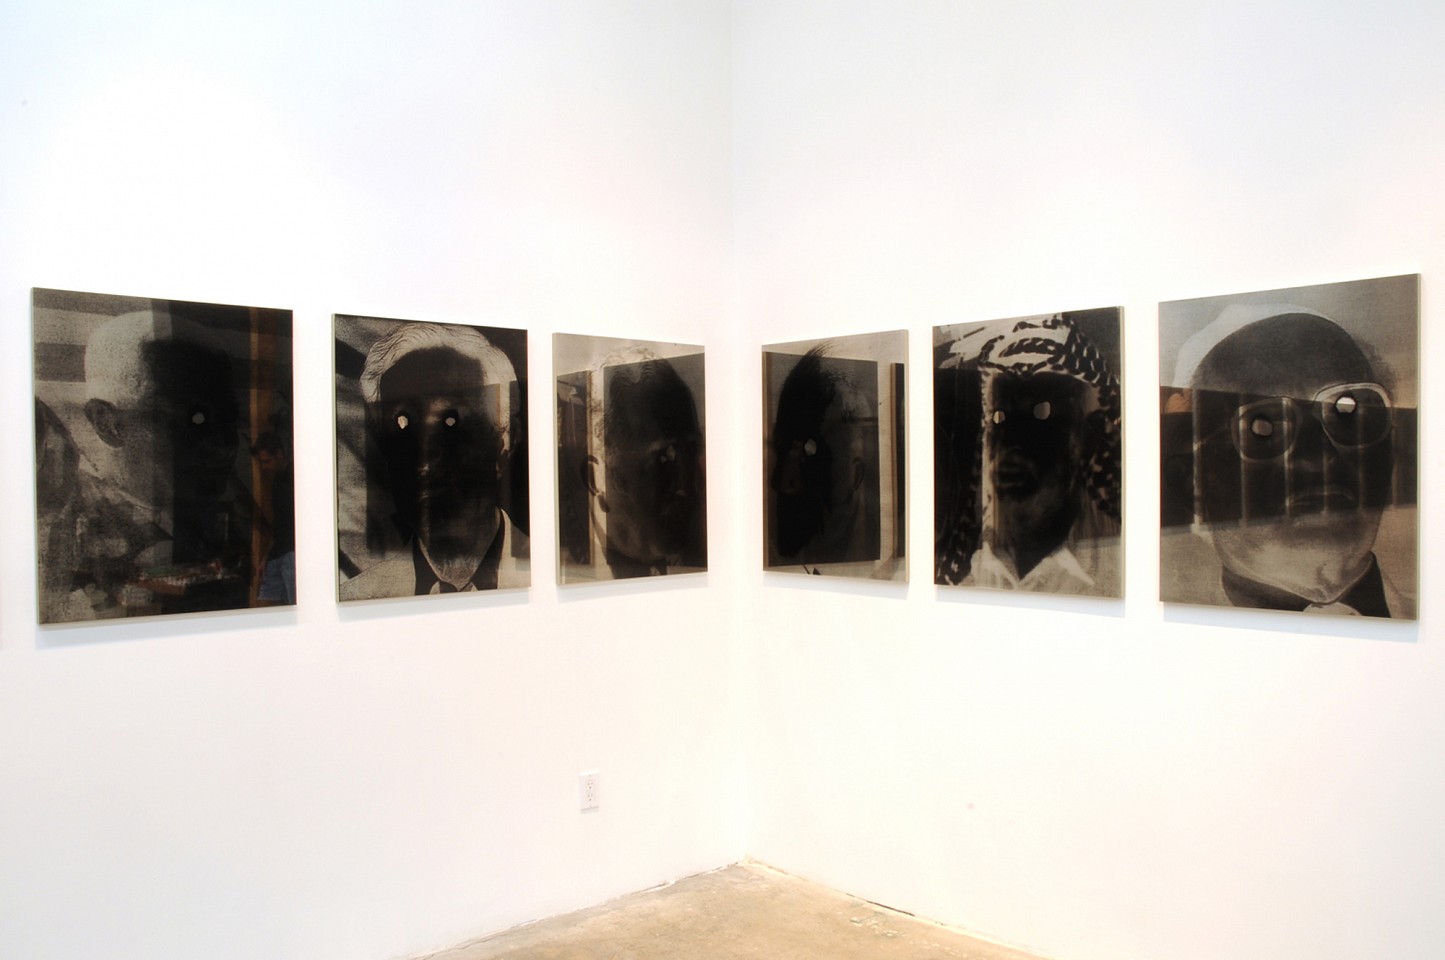 John Jurayj
Untitled (15 Men), 2008-2009
gunpowder screened on mirror polished stainless steel, 30 x 24 in.